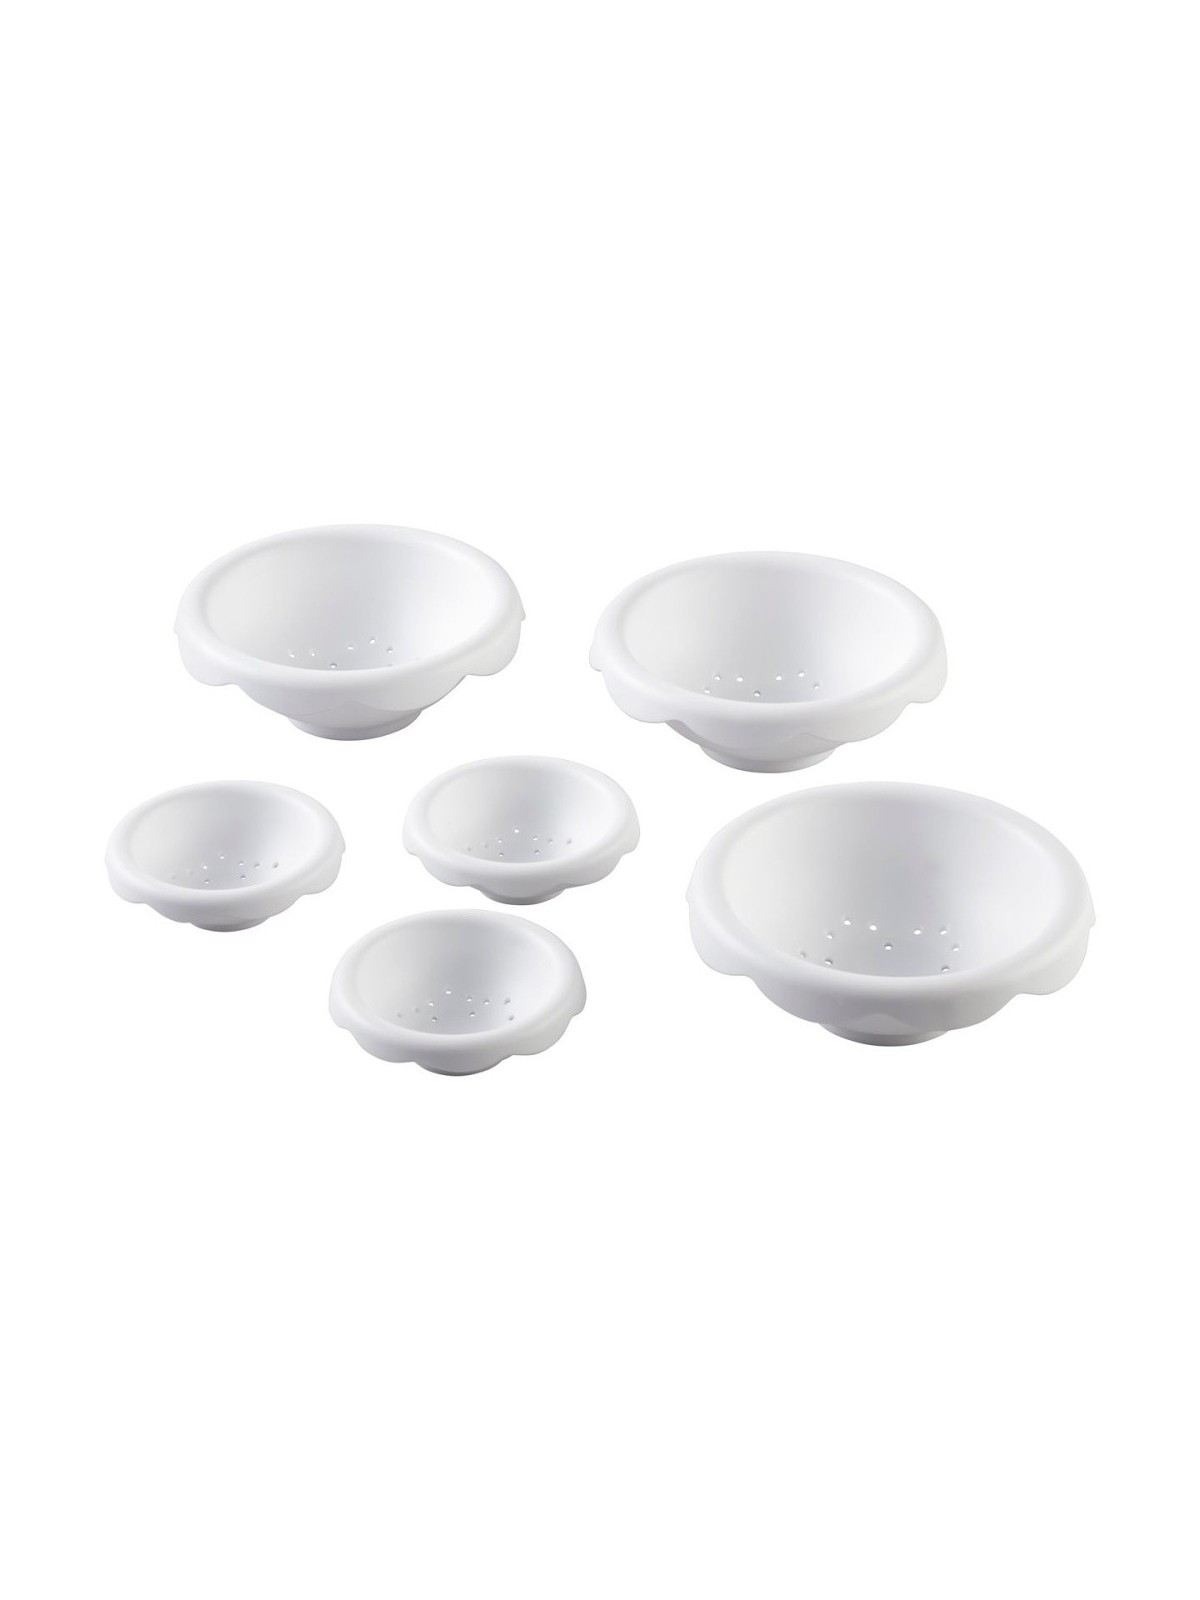 Wilton - shaping bowls 6 pcs